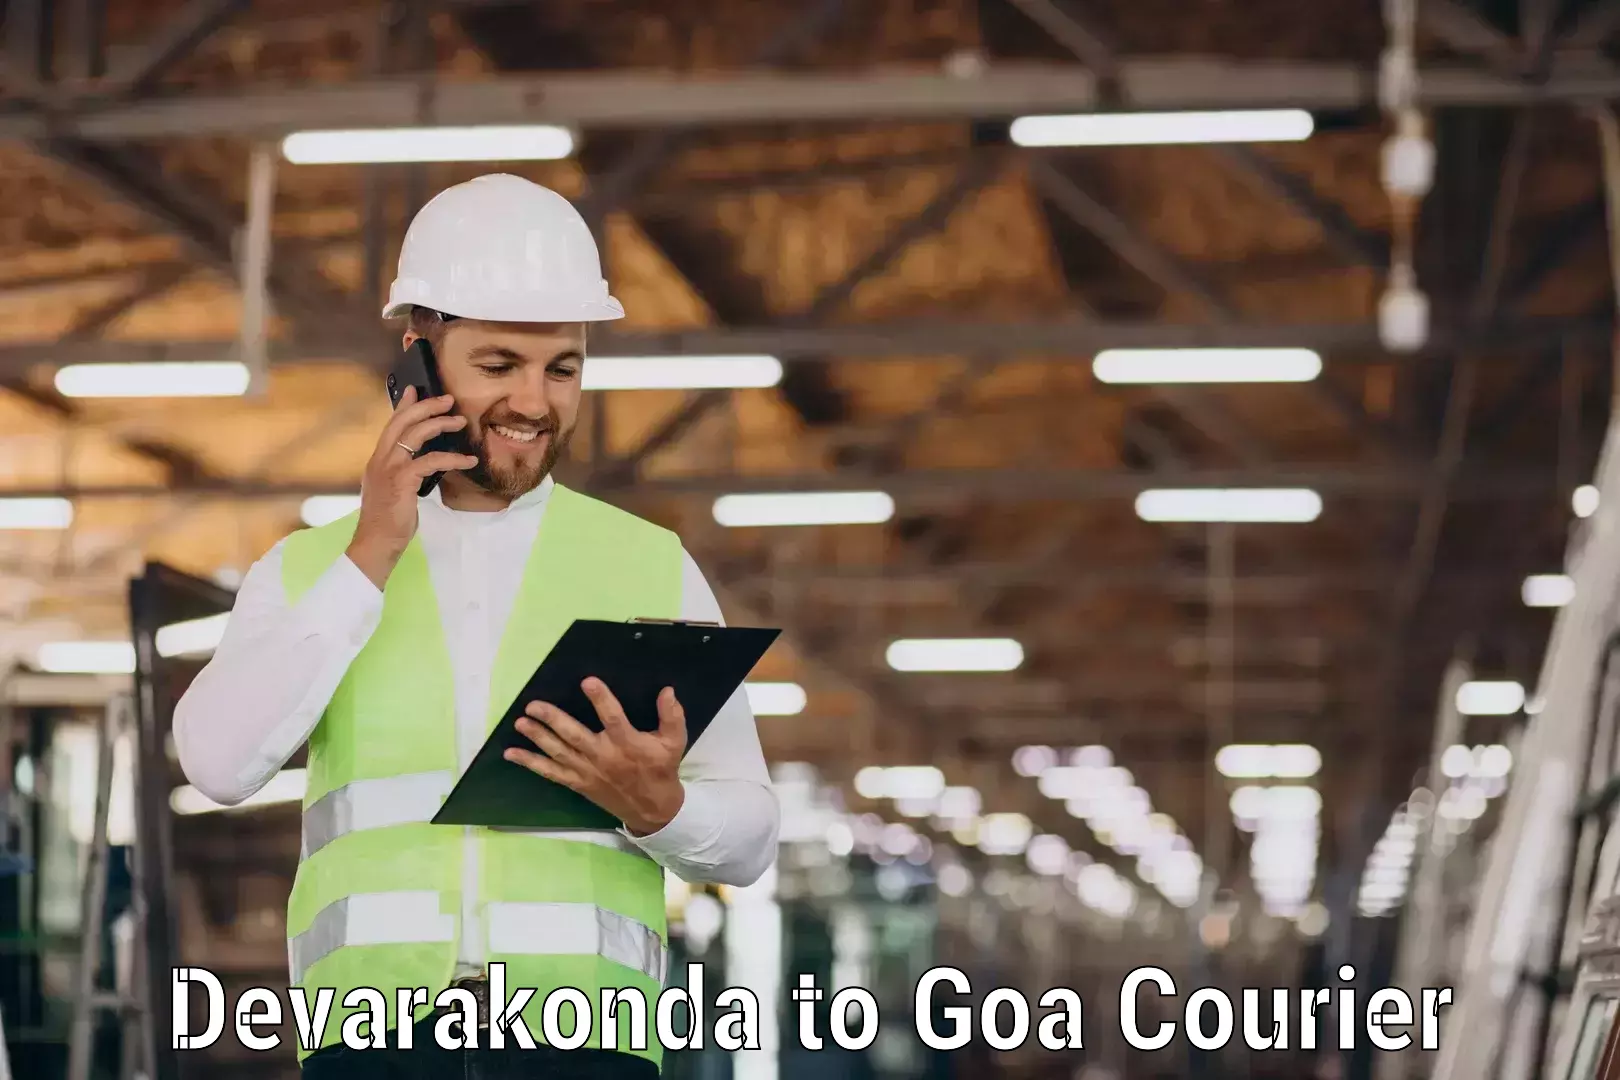 Global shipping networks Devarakonda to South Goa